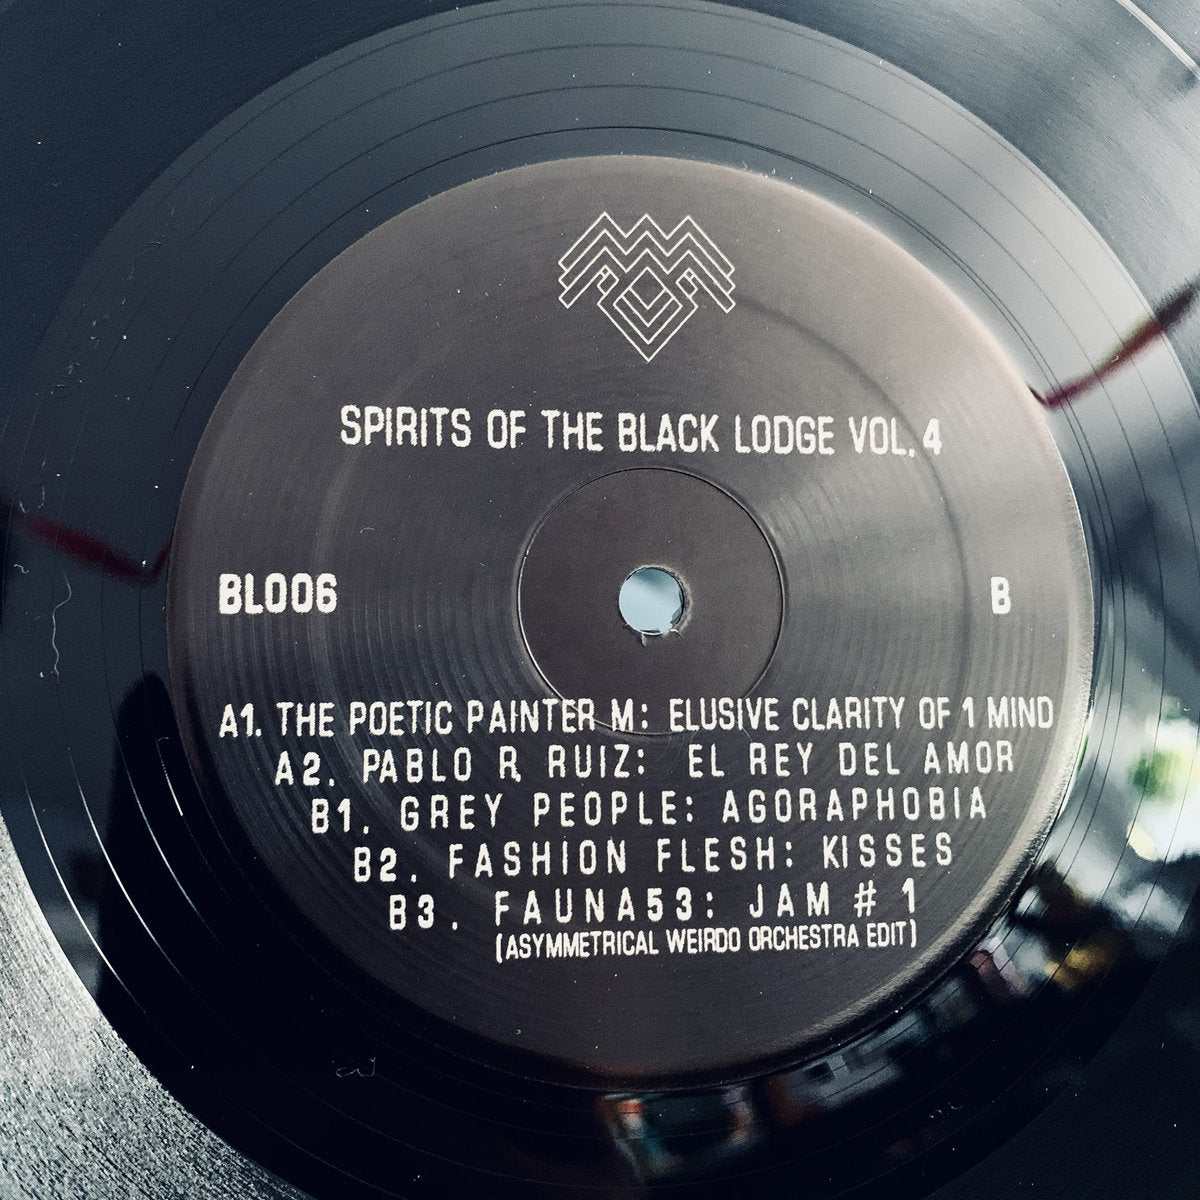 Spirits of the black lodge Vol 4